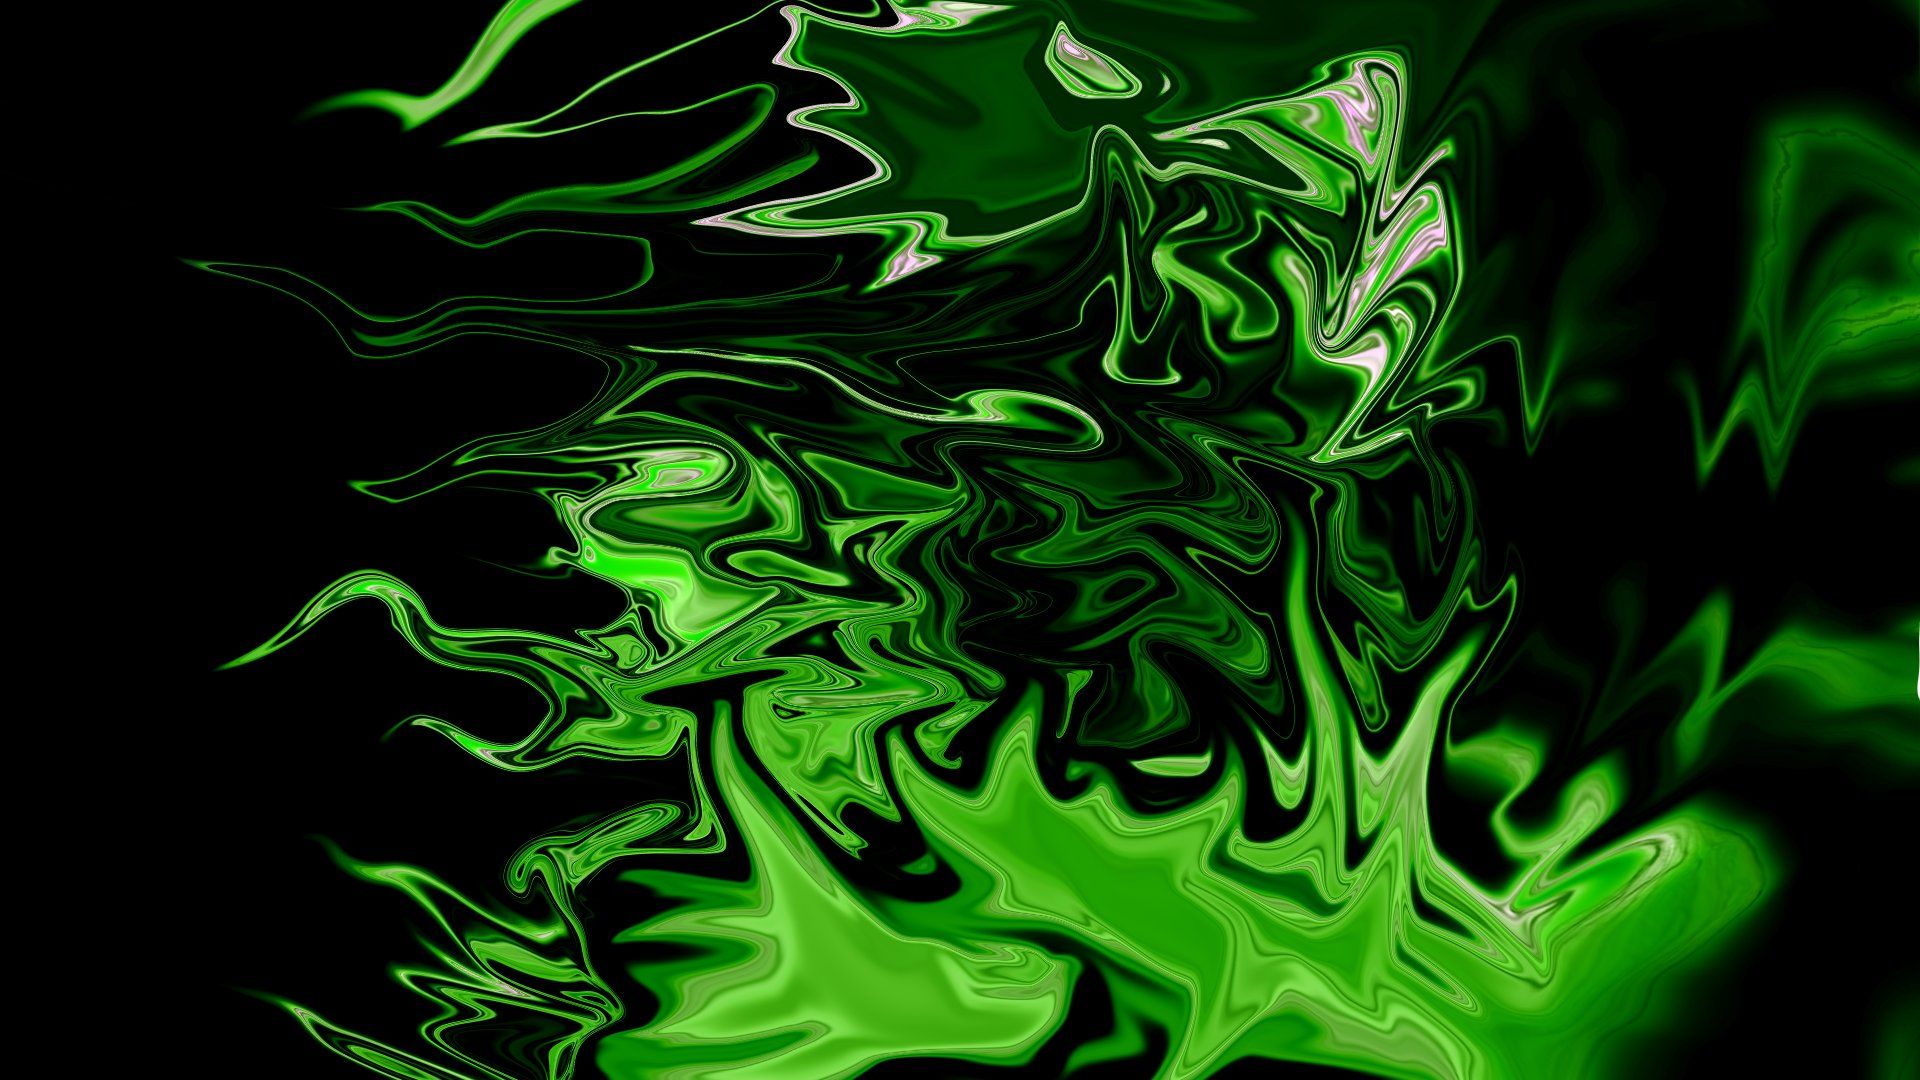 A green abstract artwork on black background - Neon green, lime green, dark green, light green